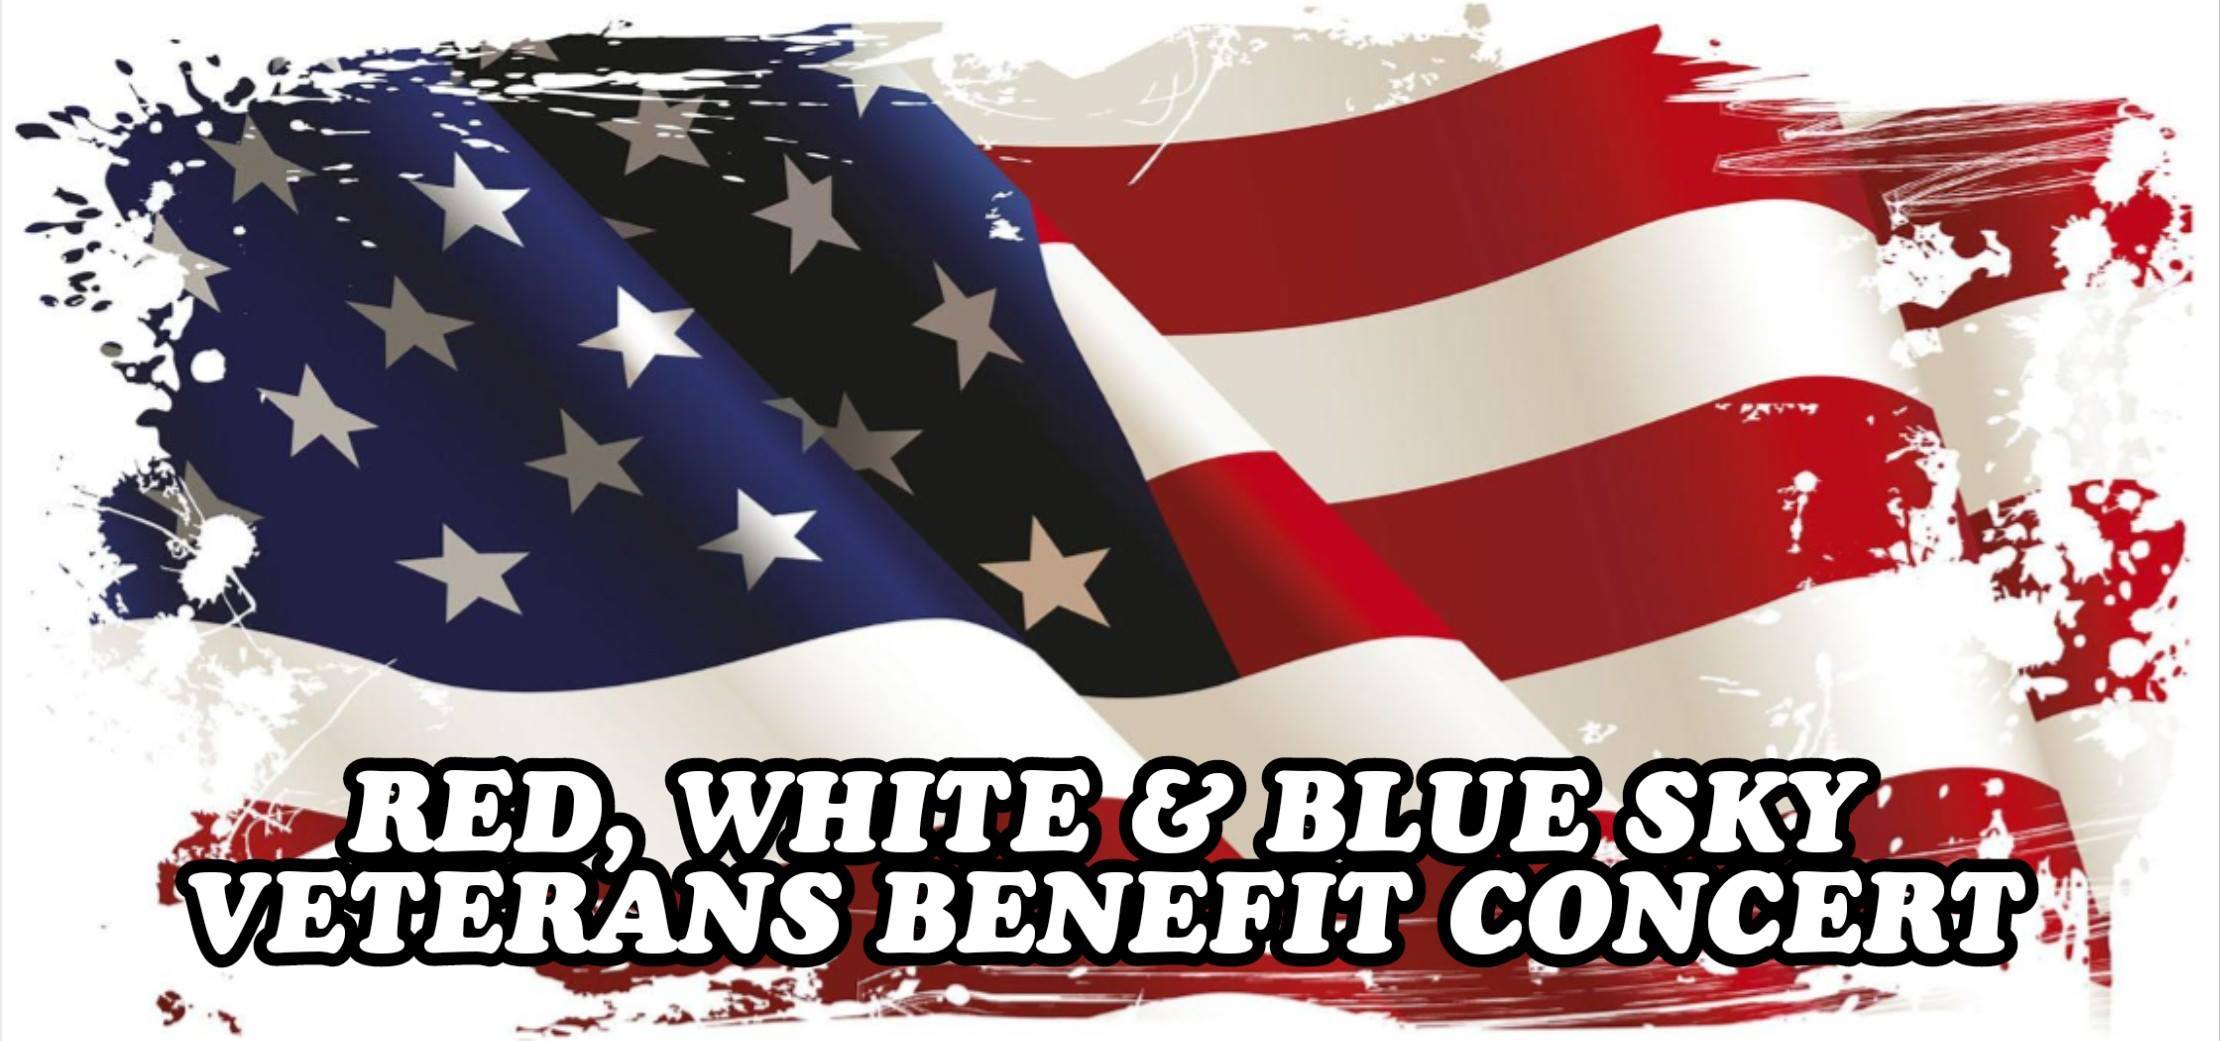 Red White and Blue Veterans Logo - Red, White & Blue Sky Veterans Benefit Concert